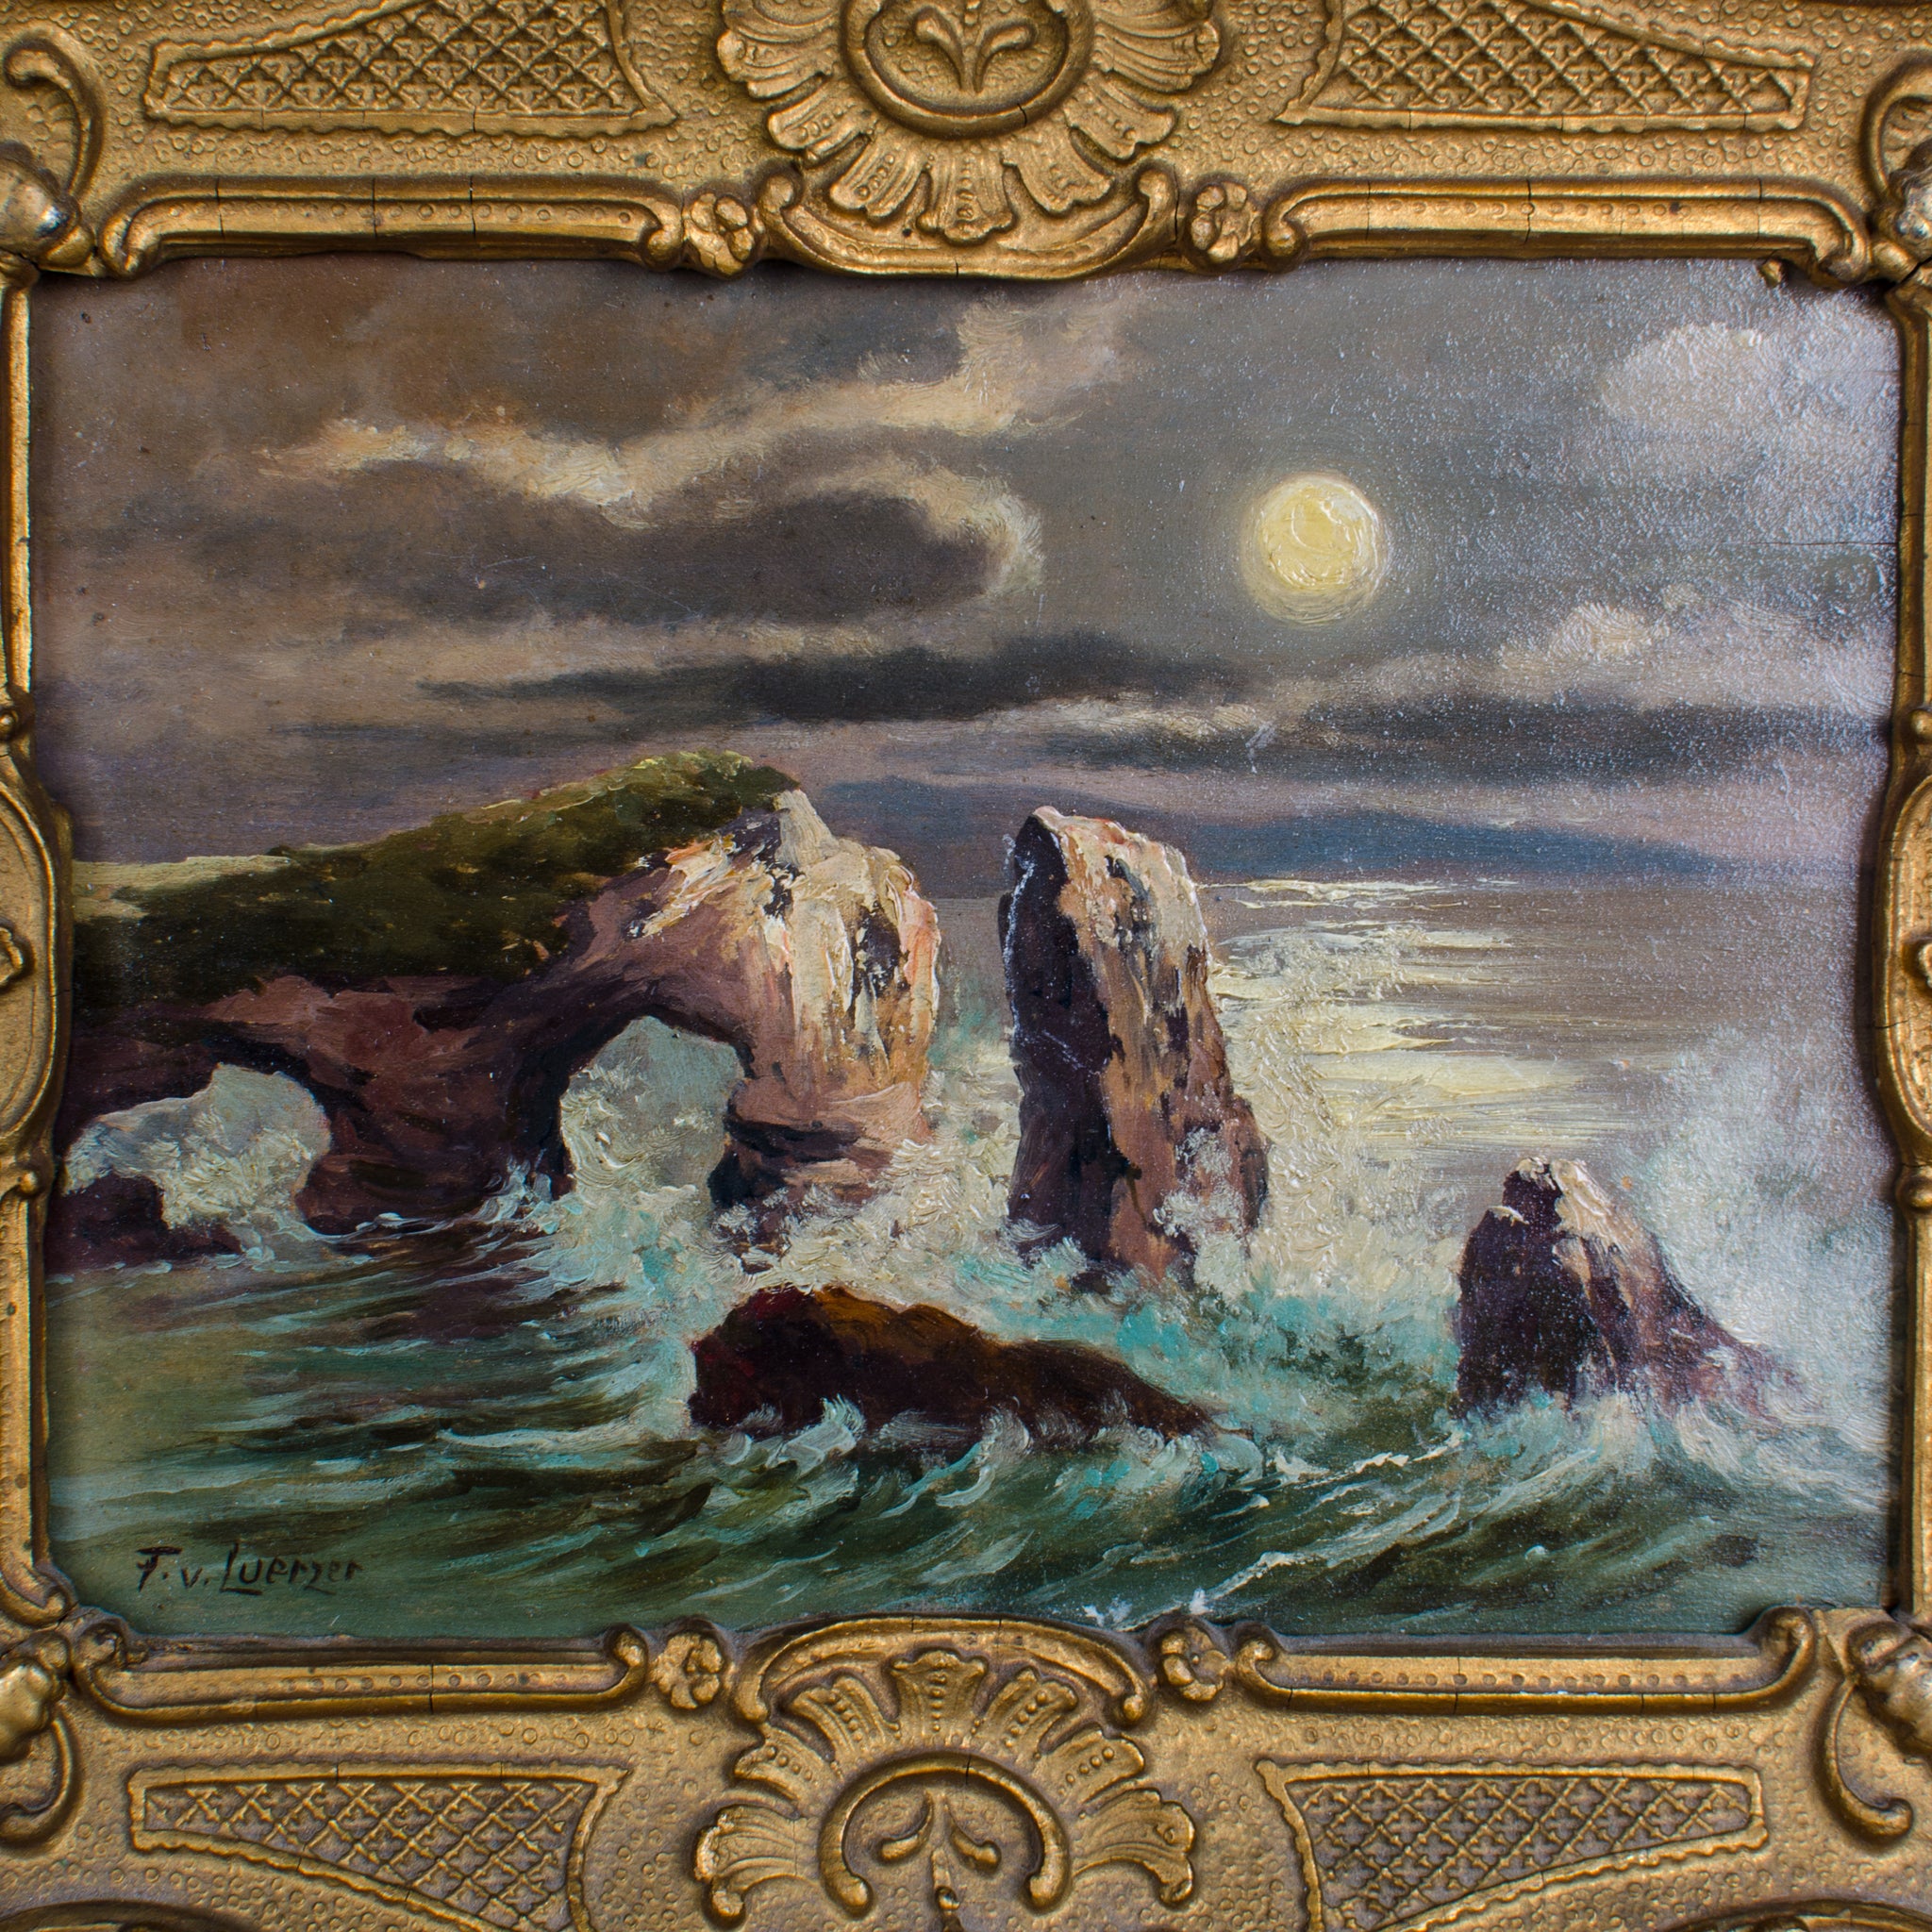 Feodor von Luerzer - Nocturnal California Coast Paintings - A Pair